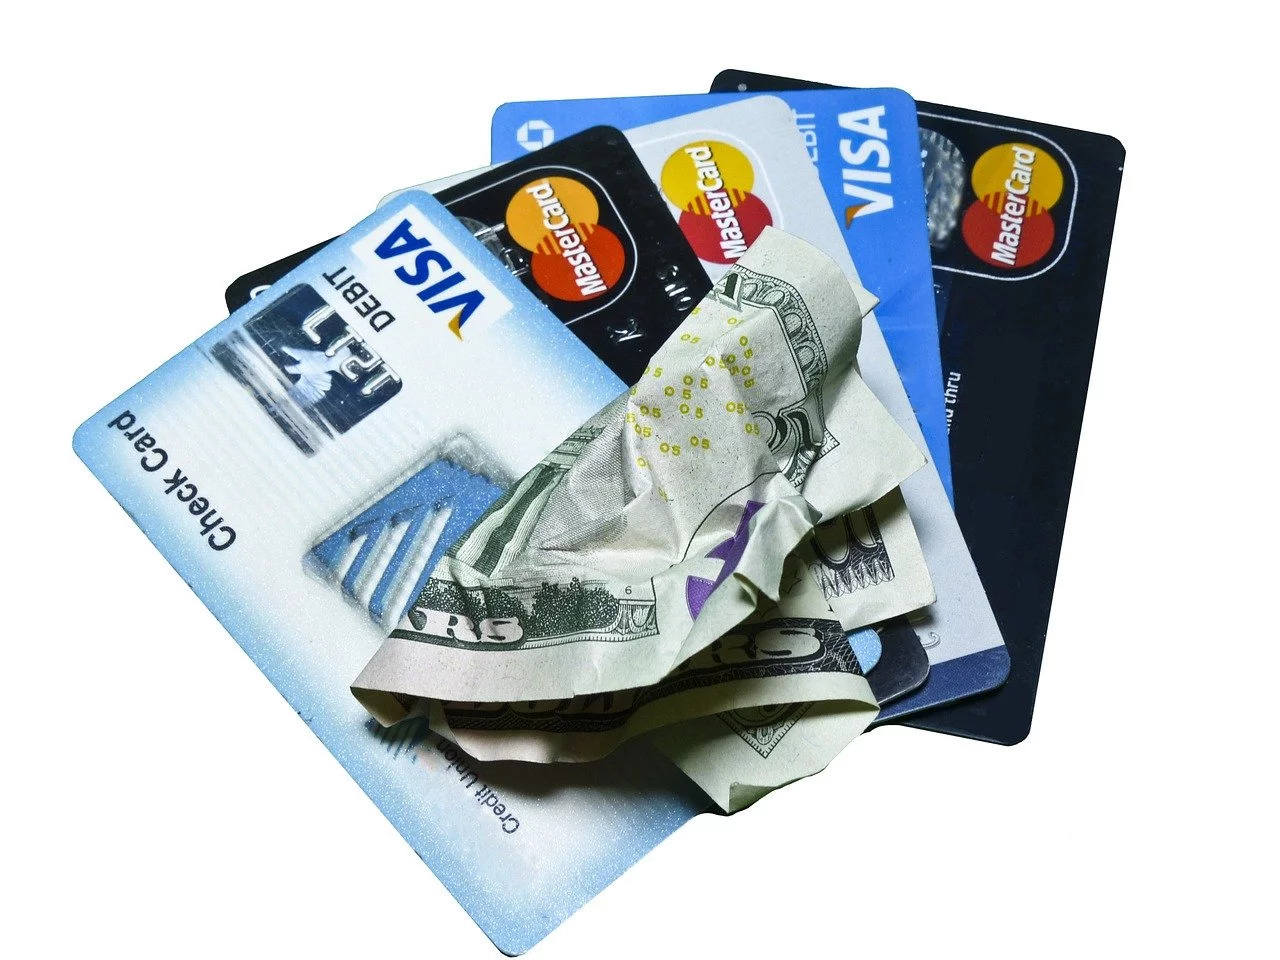 Unlock Financial Flexibility: Cash on Credit Card in Andheri